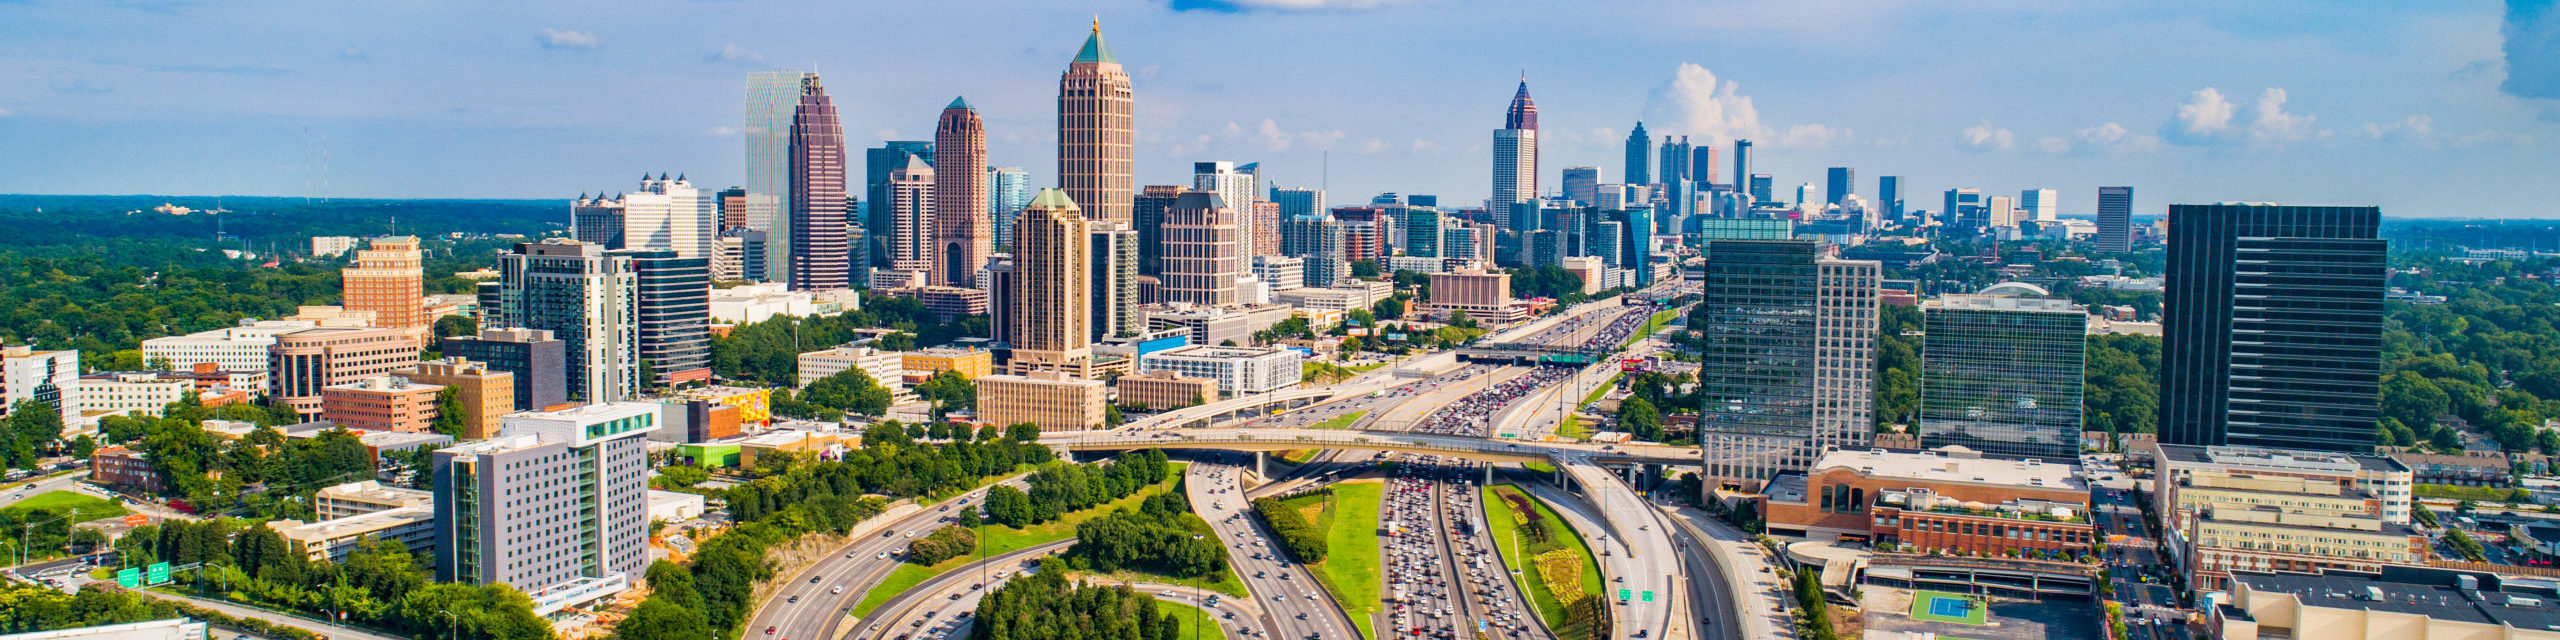 Atlanta, Georgia Cityscape